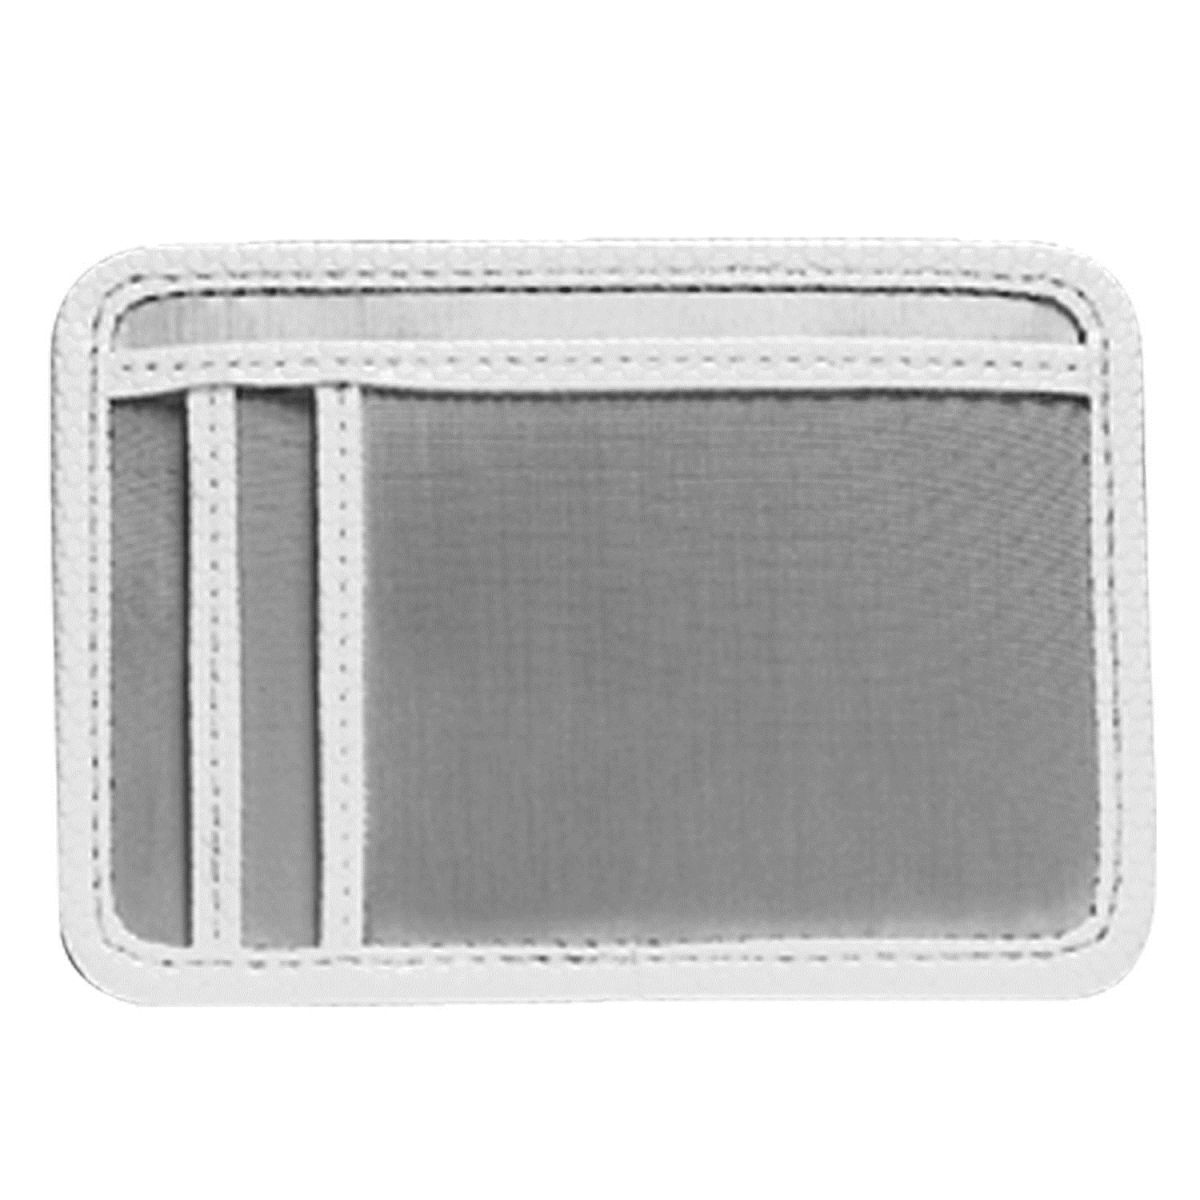 Stewart/Stand Stainless Steel Minimal Wallet - Silver/White